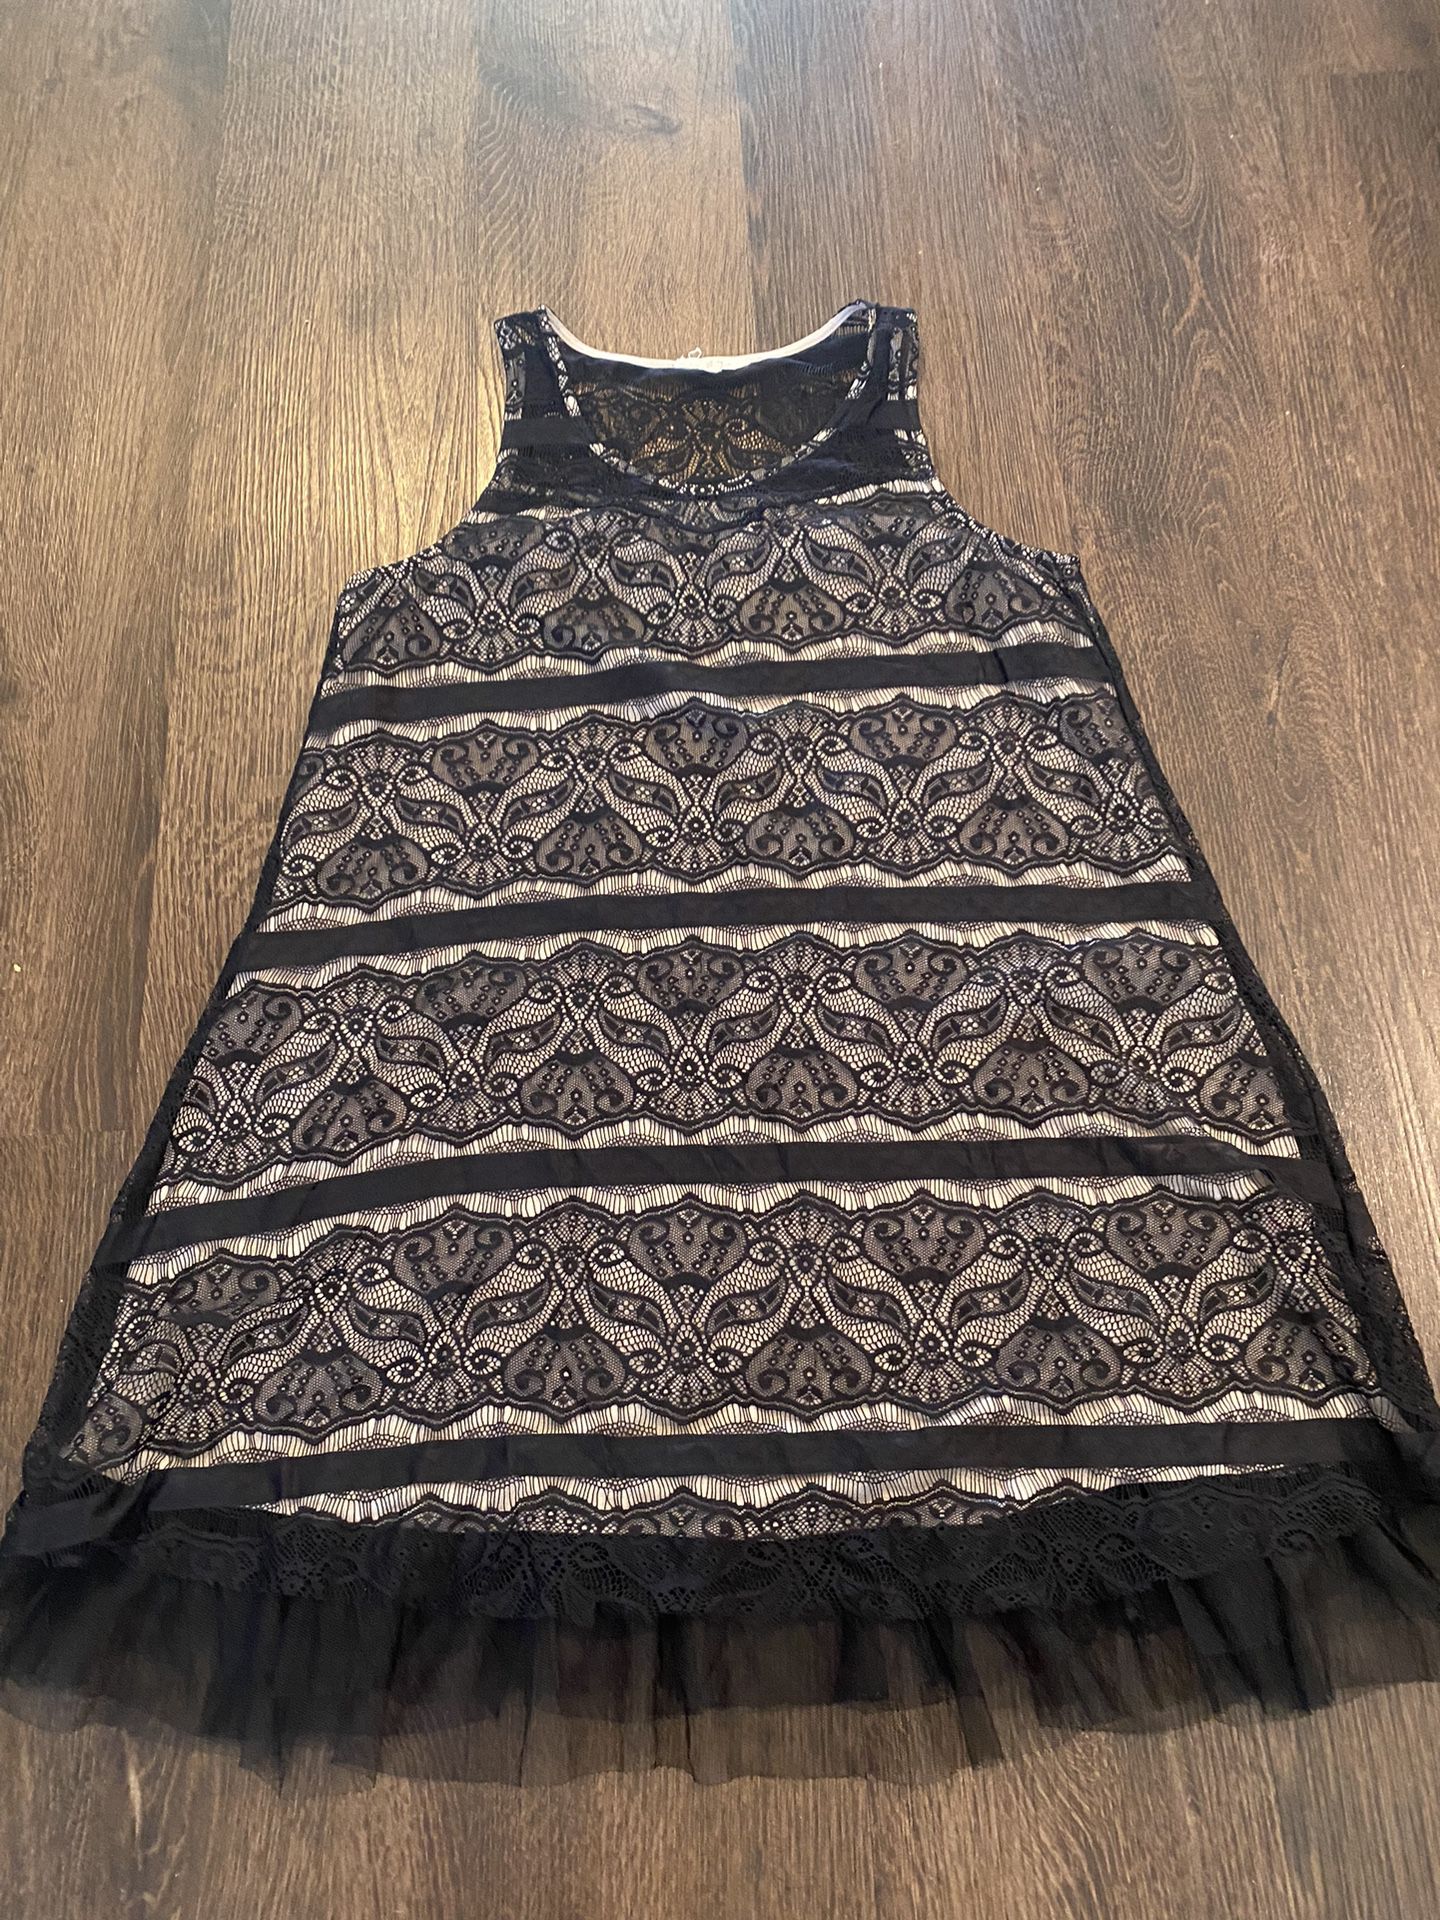 Womans Black Lace Shirt Dress Size Large By Hem & Thread #16